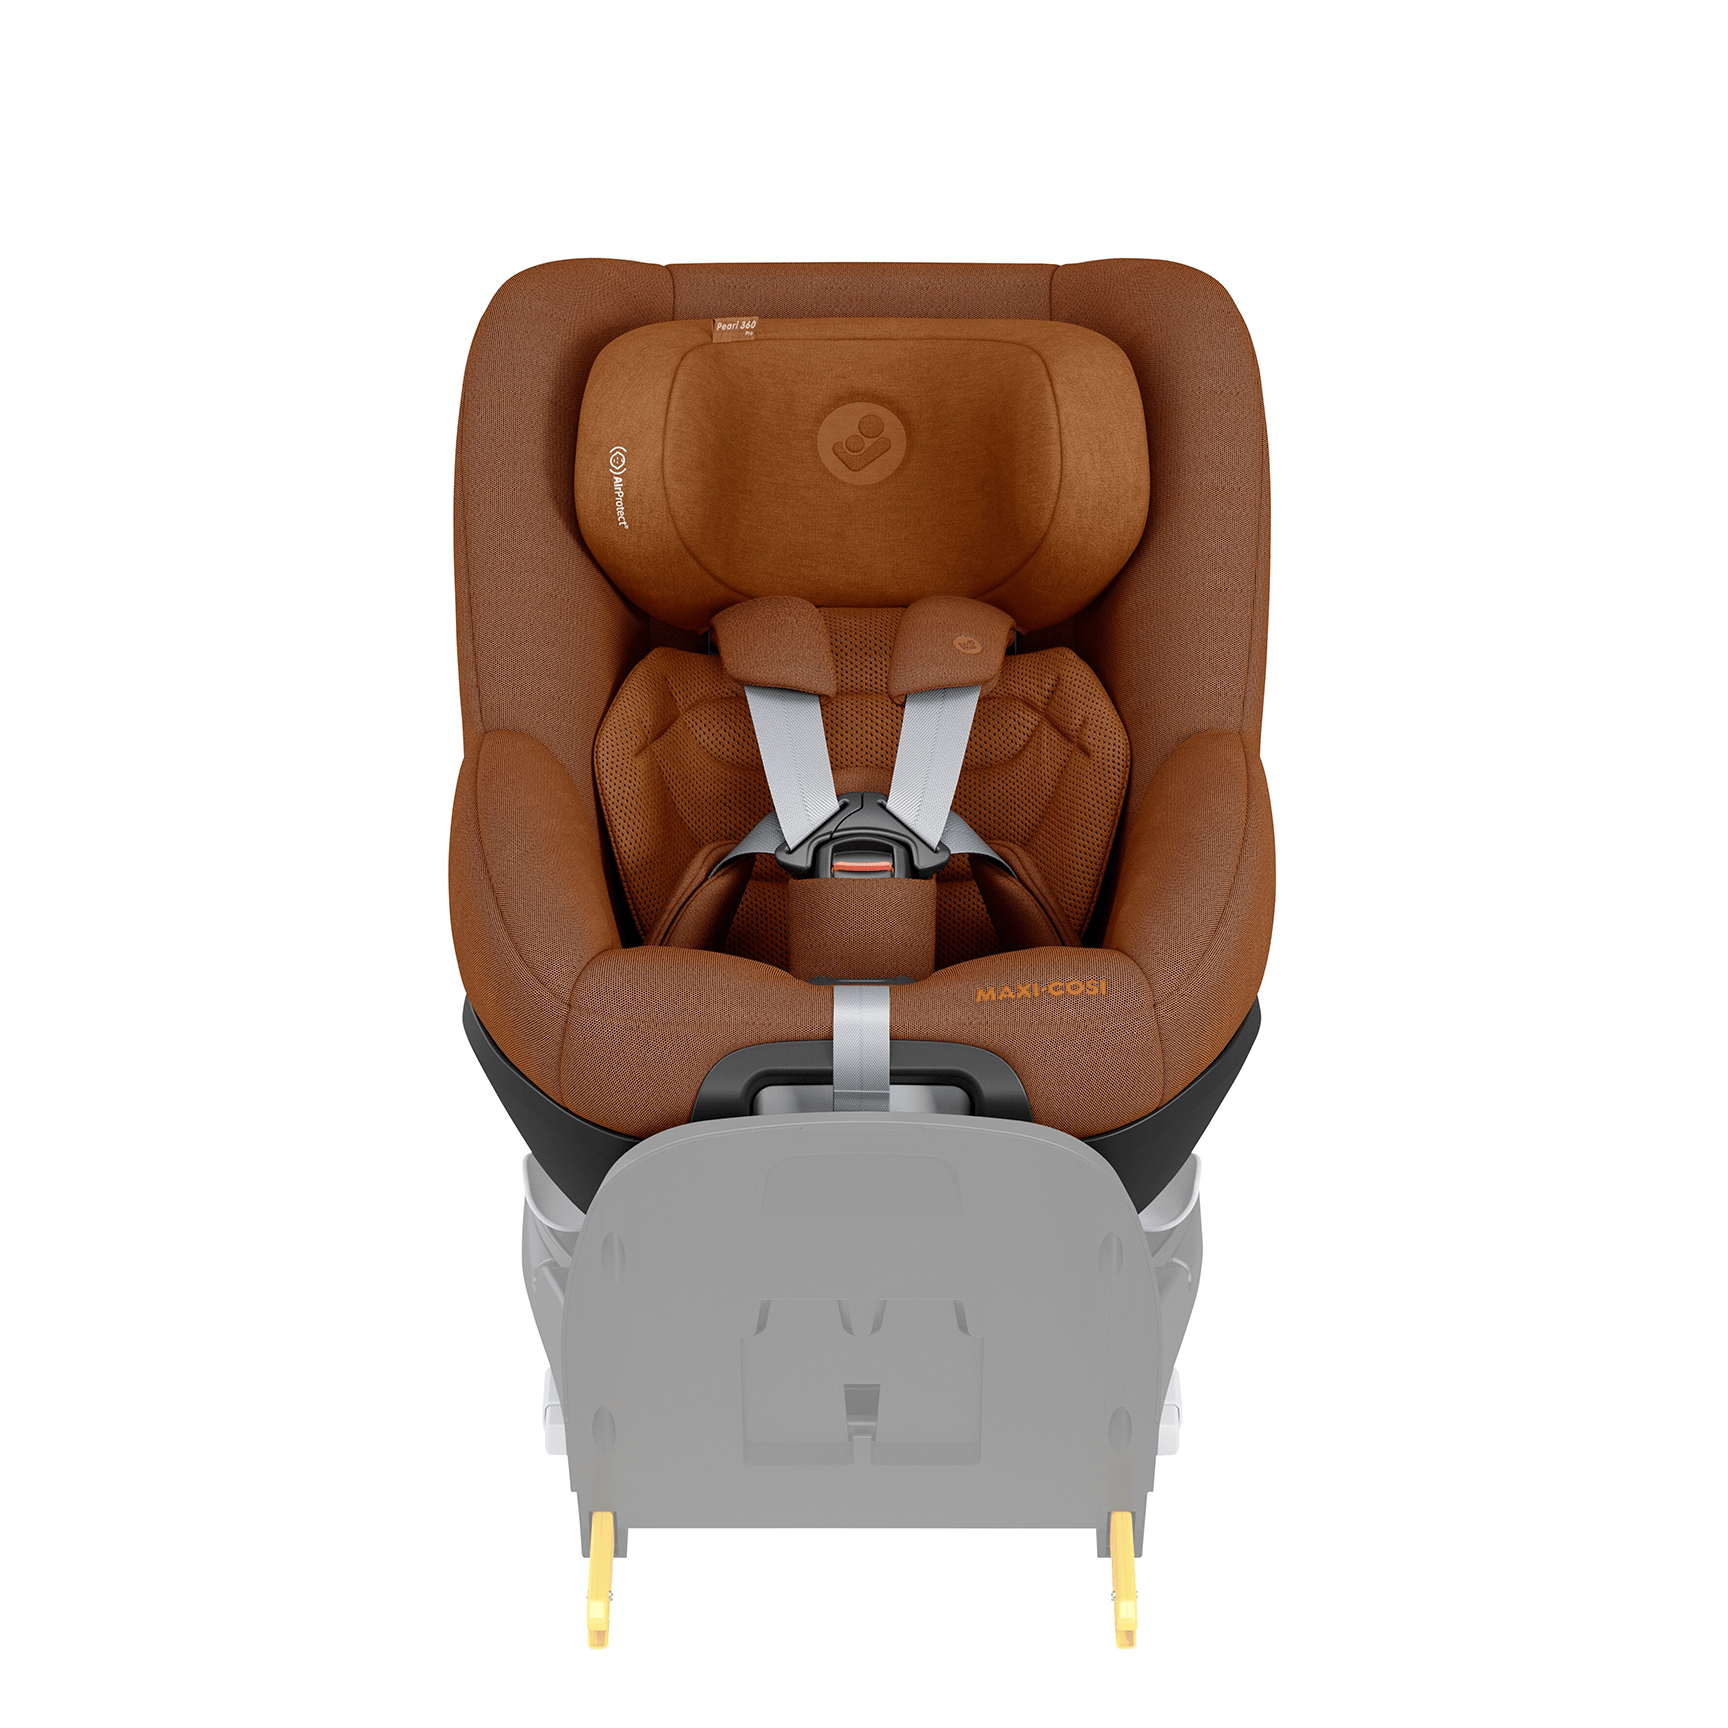 Maxi-Cosi Pearl 360 Pro in Authentic Cognac Baby Car Seats 8053650110 8712930184690